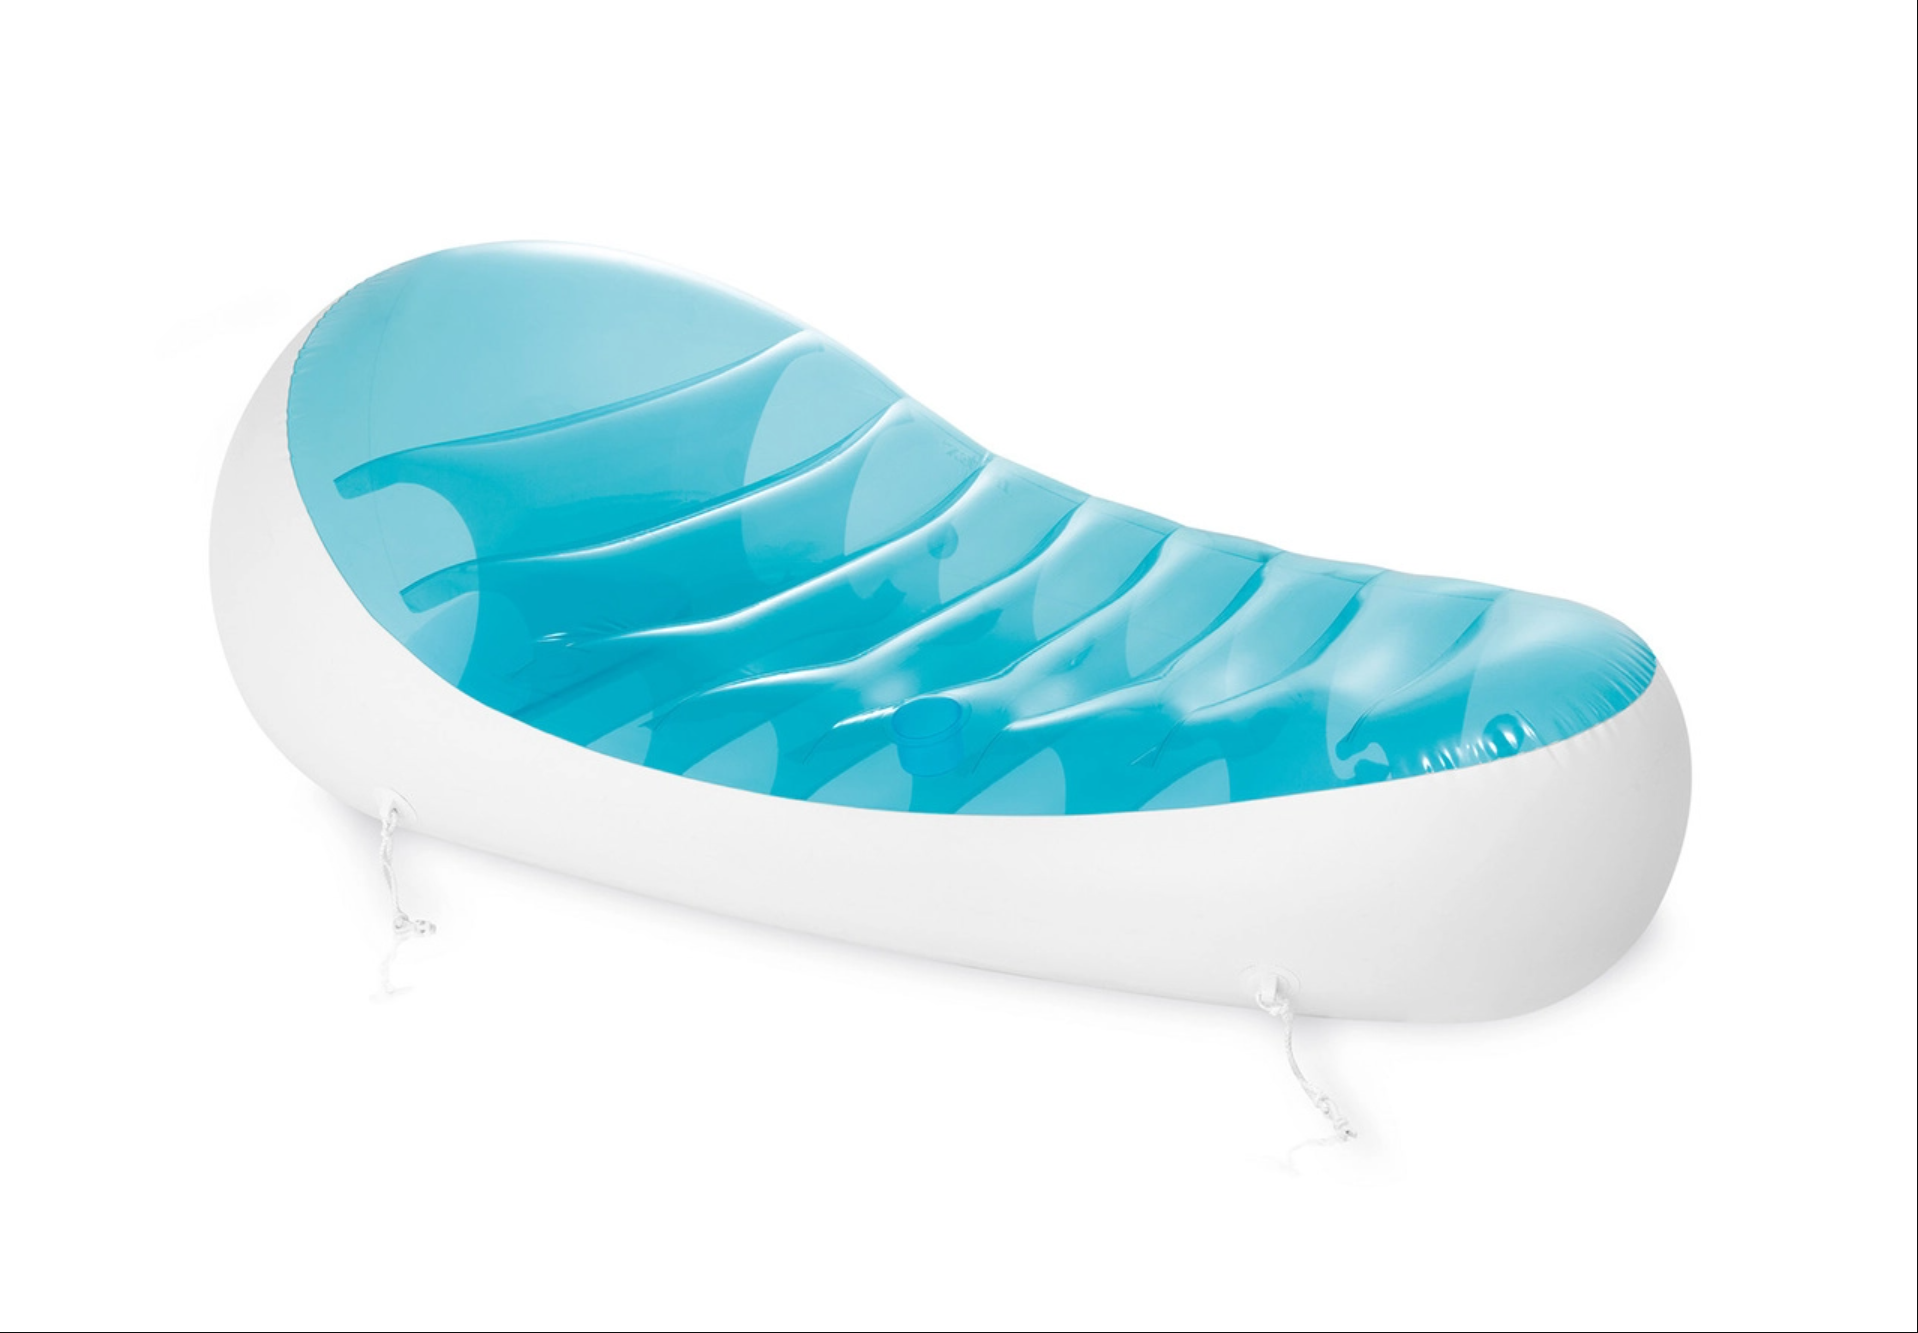 Petal Lounge Chair Pool Floats